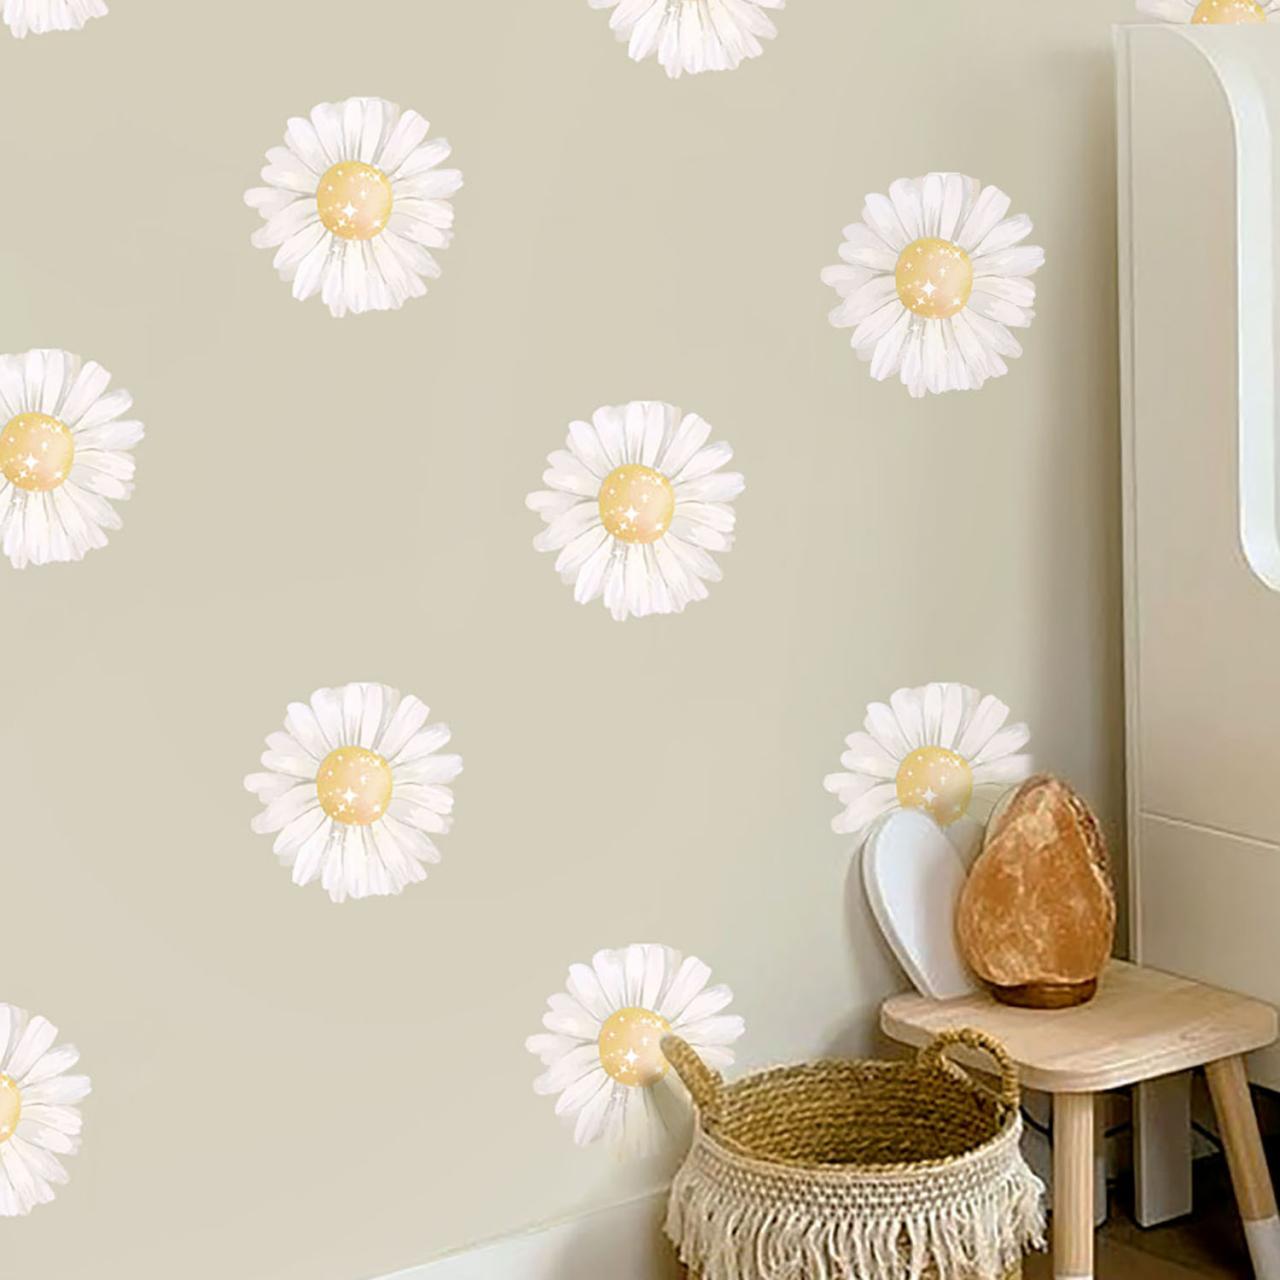 White Daisy Wall Sticker Fabric Waterproof Wall Decal Peel and Stick Art Decoration